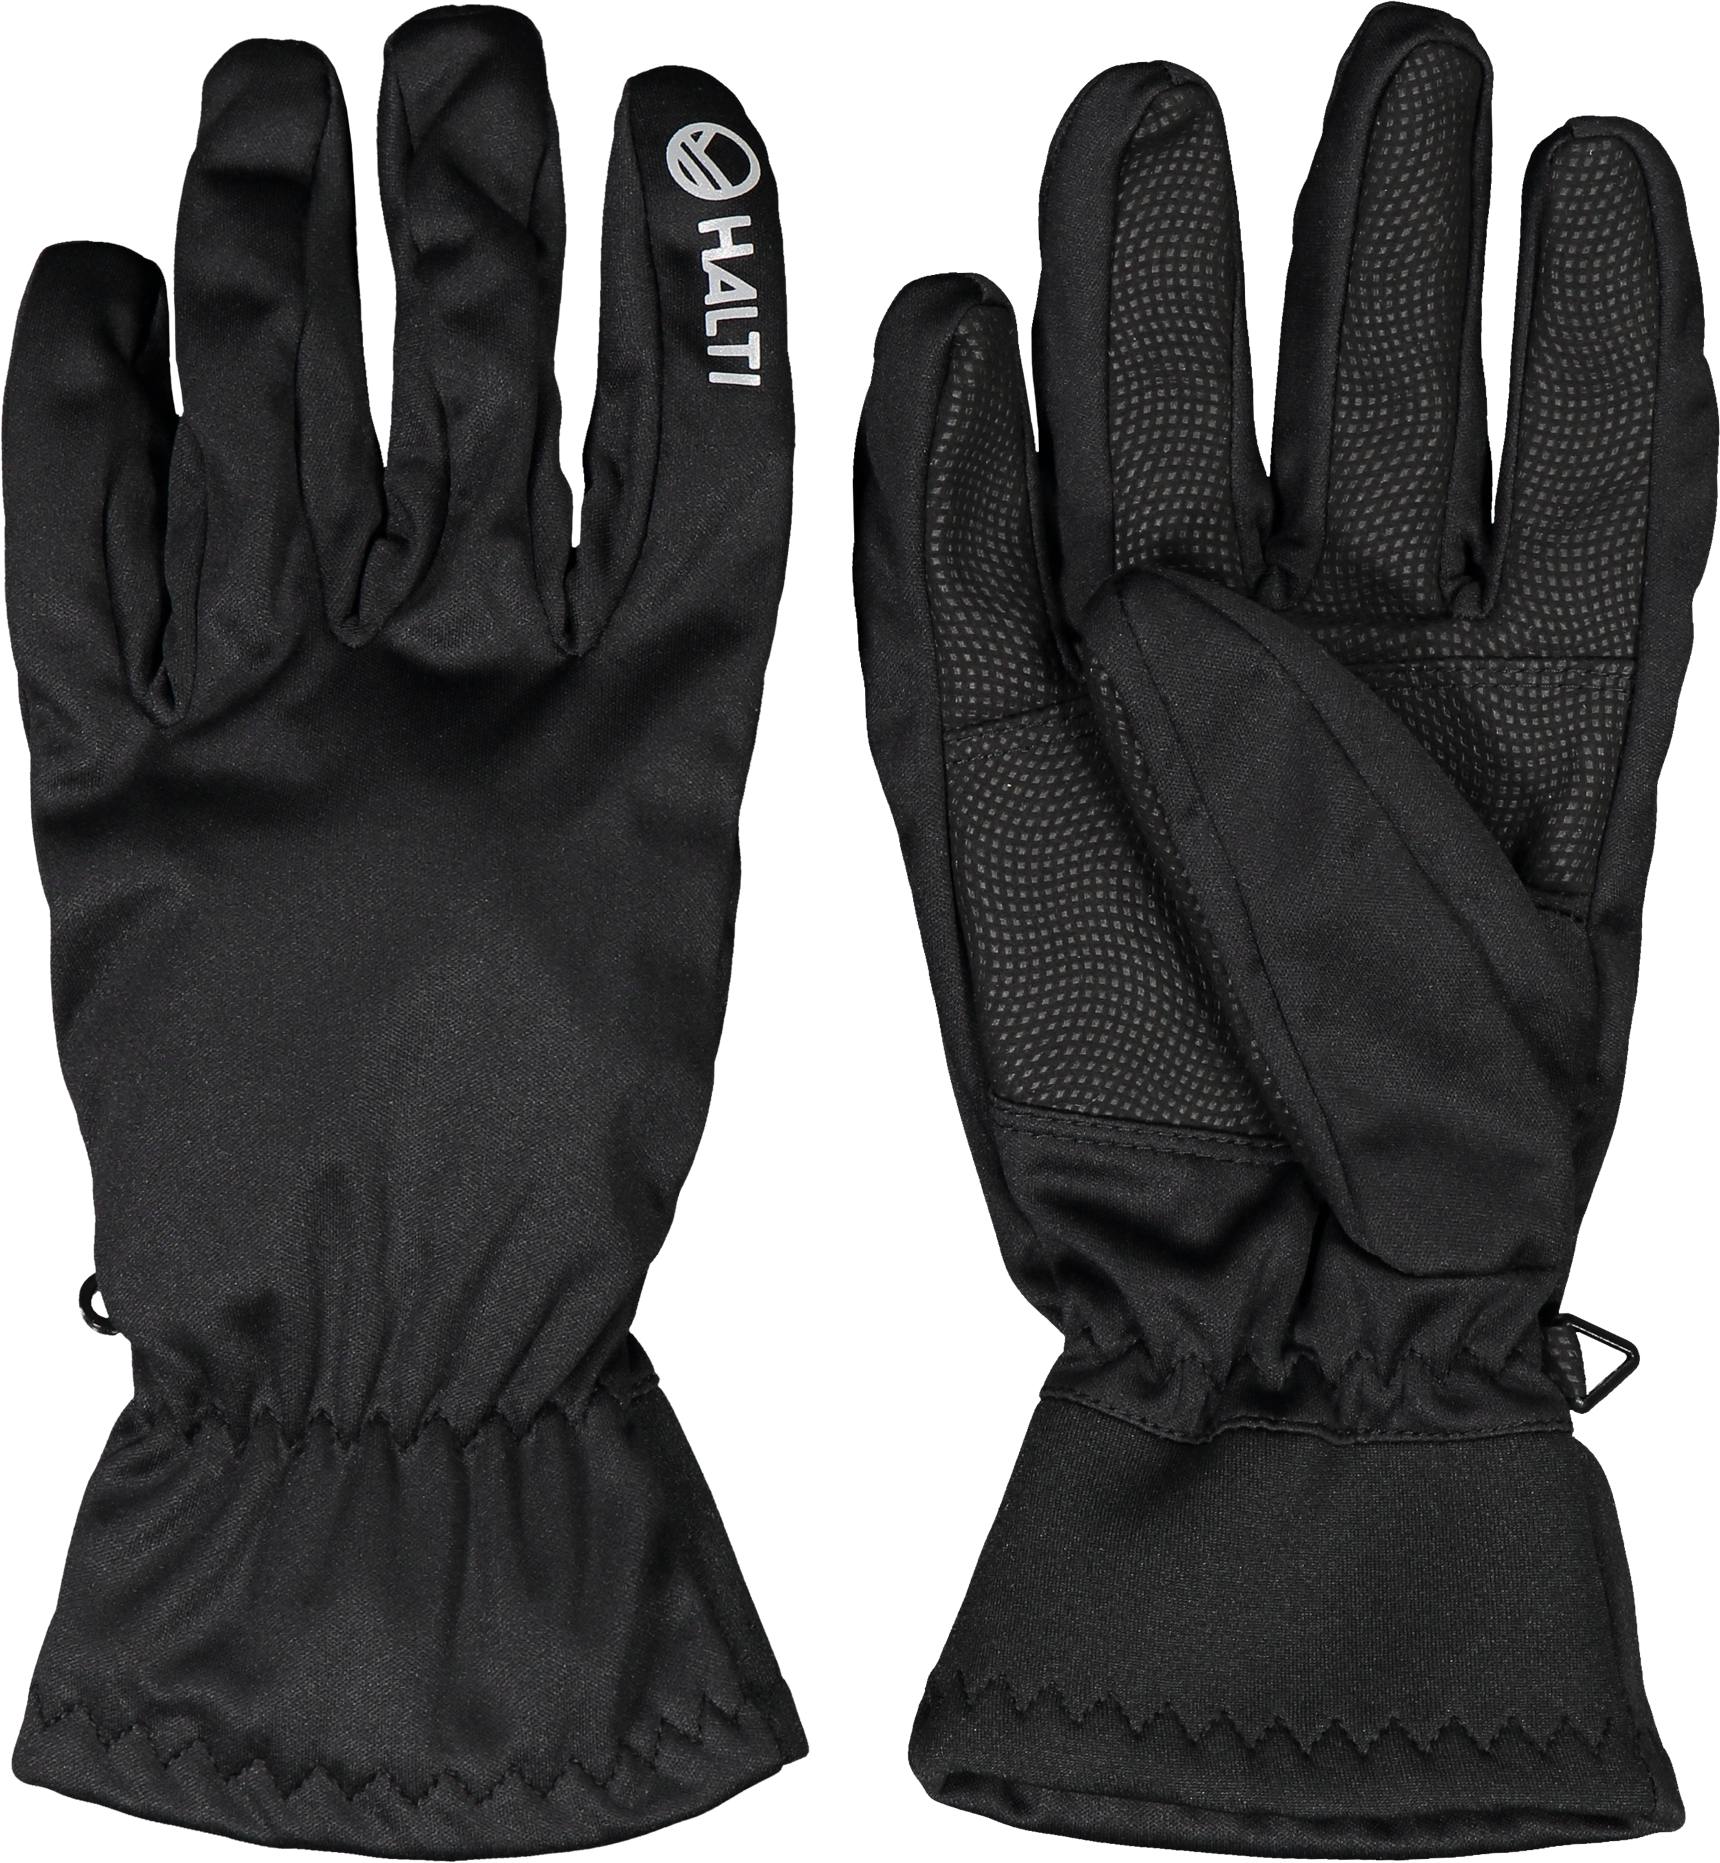 Adults Barts Polartec Powerstretch Gloves Black 